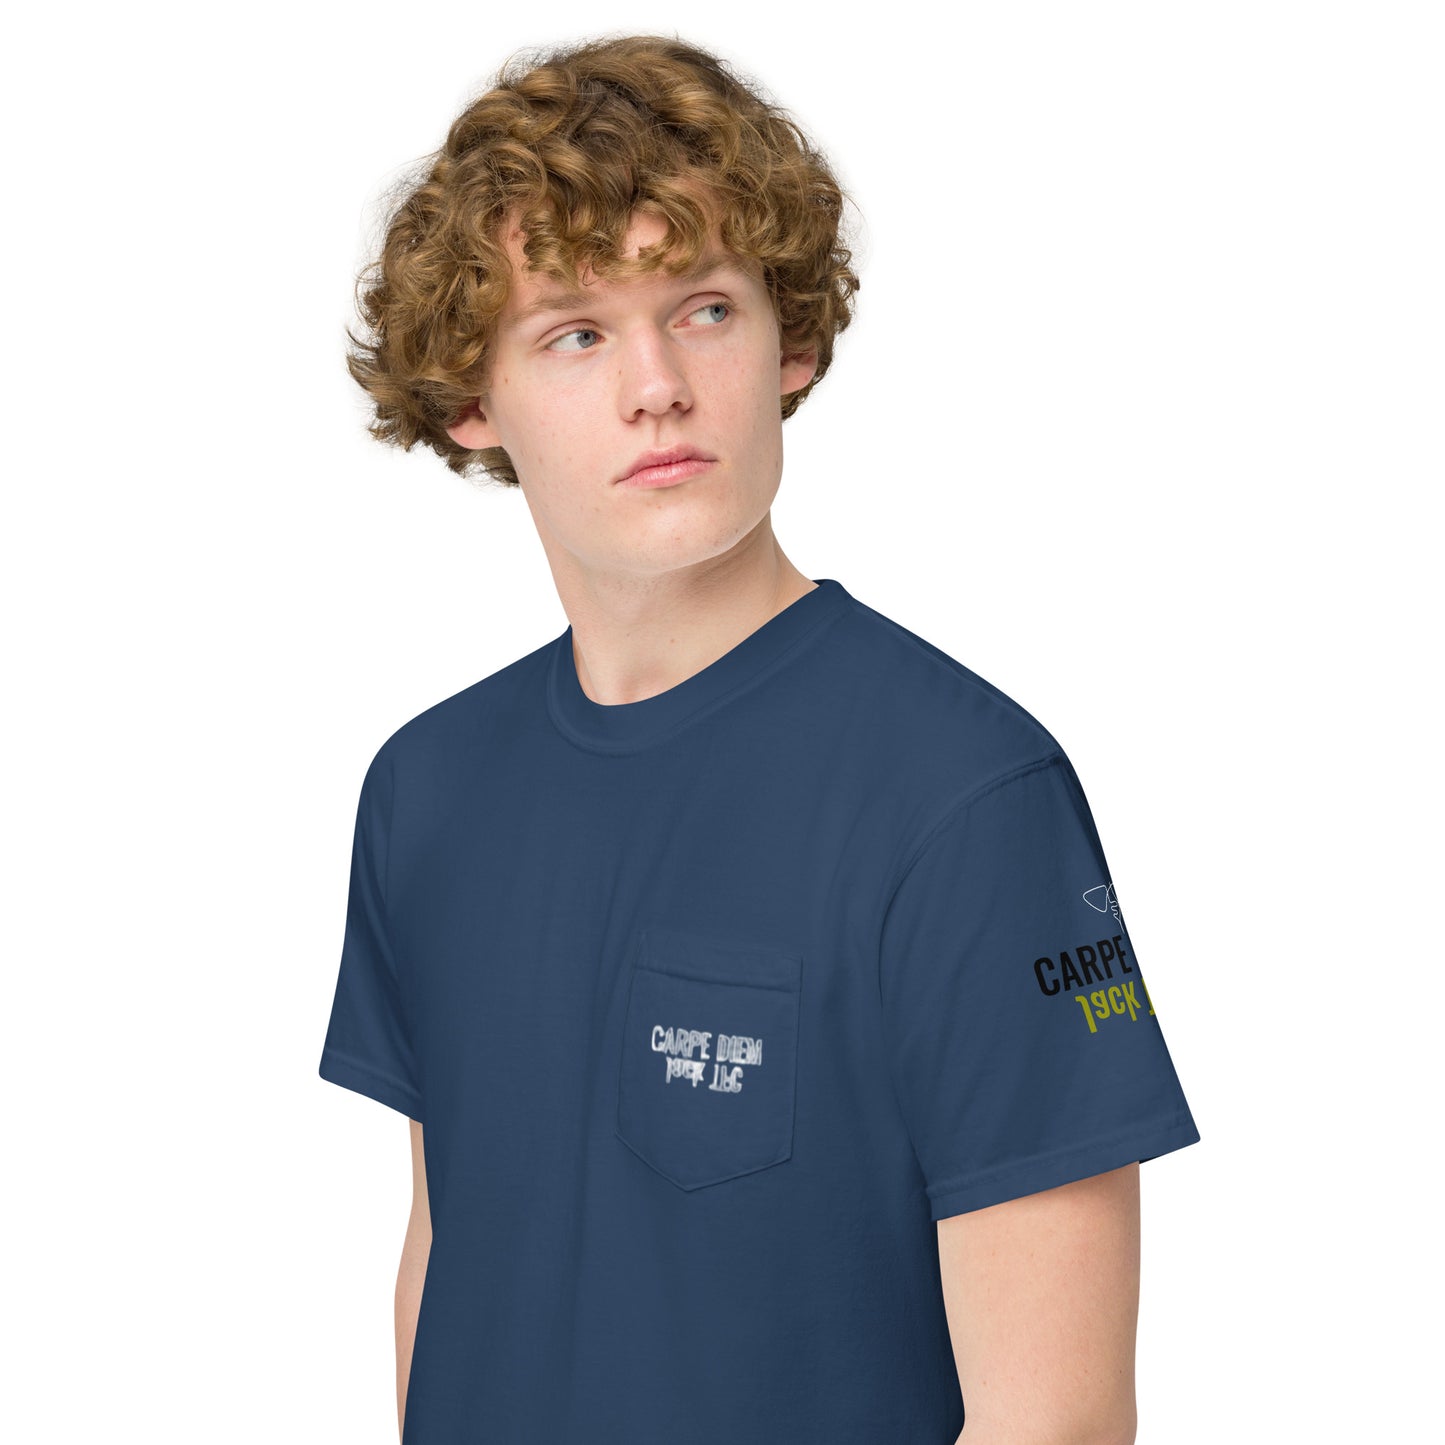 Unisex "FIND BALANCE" pocket t-shirt